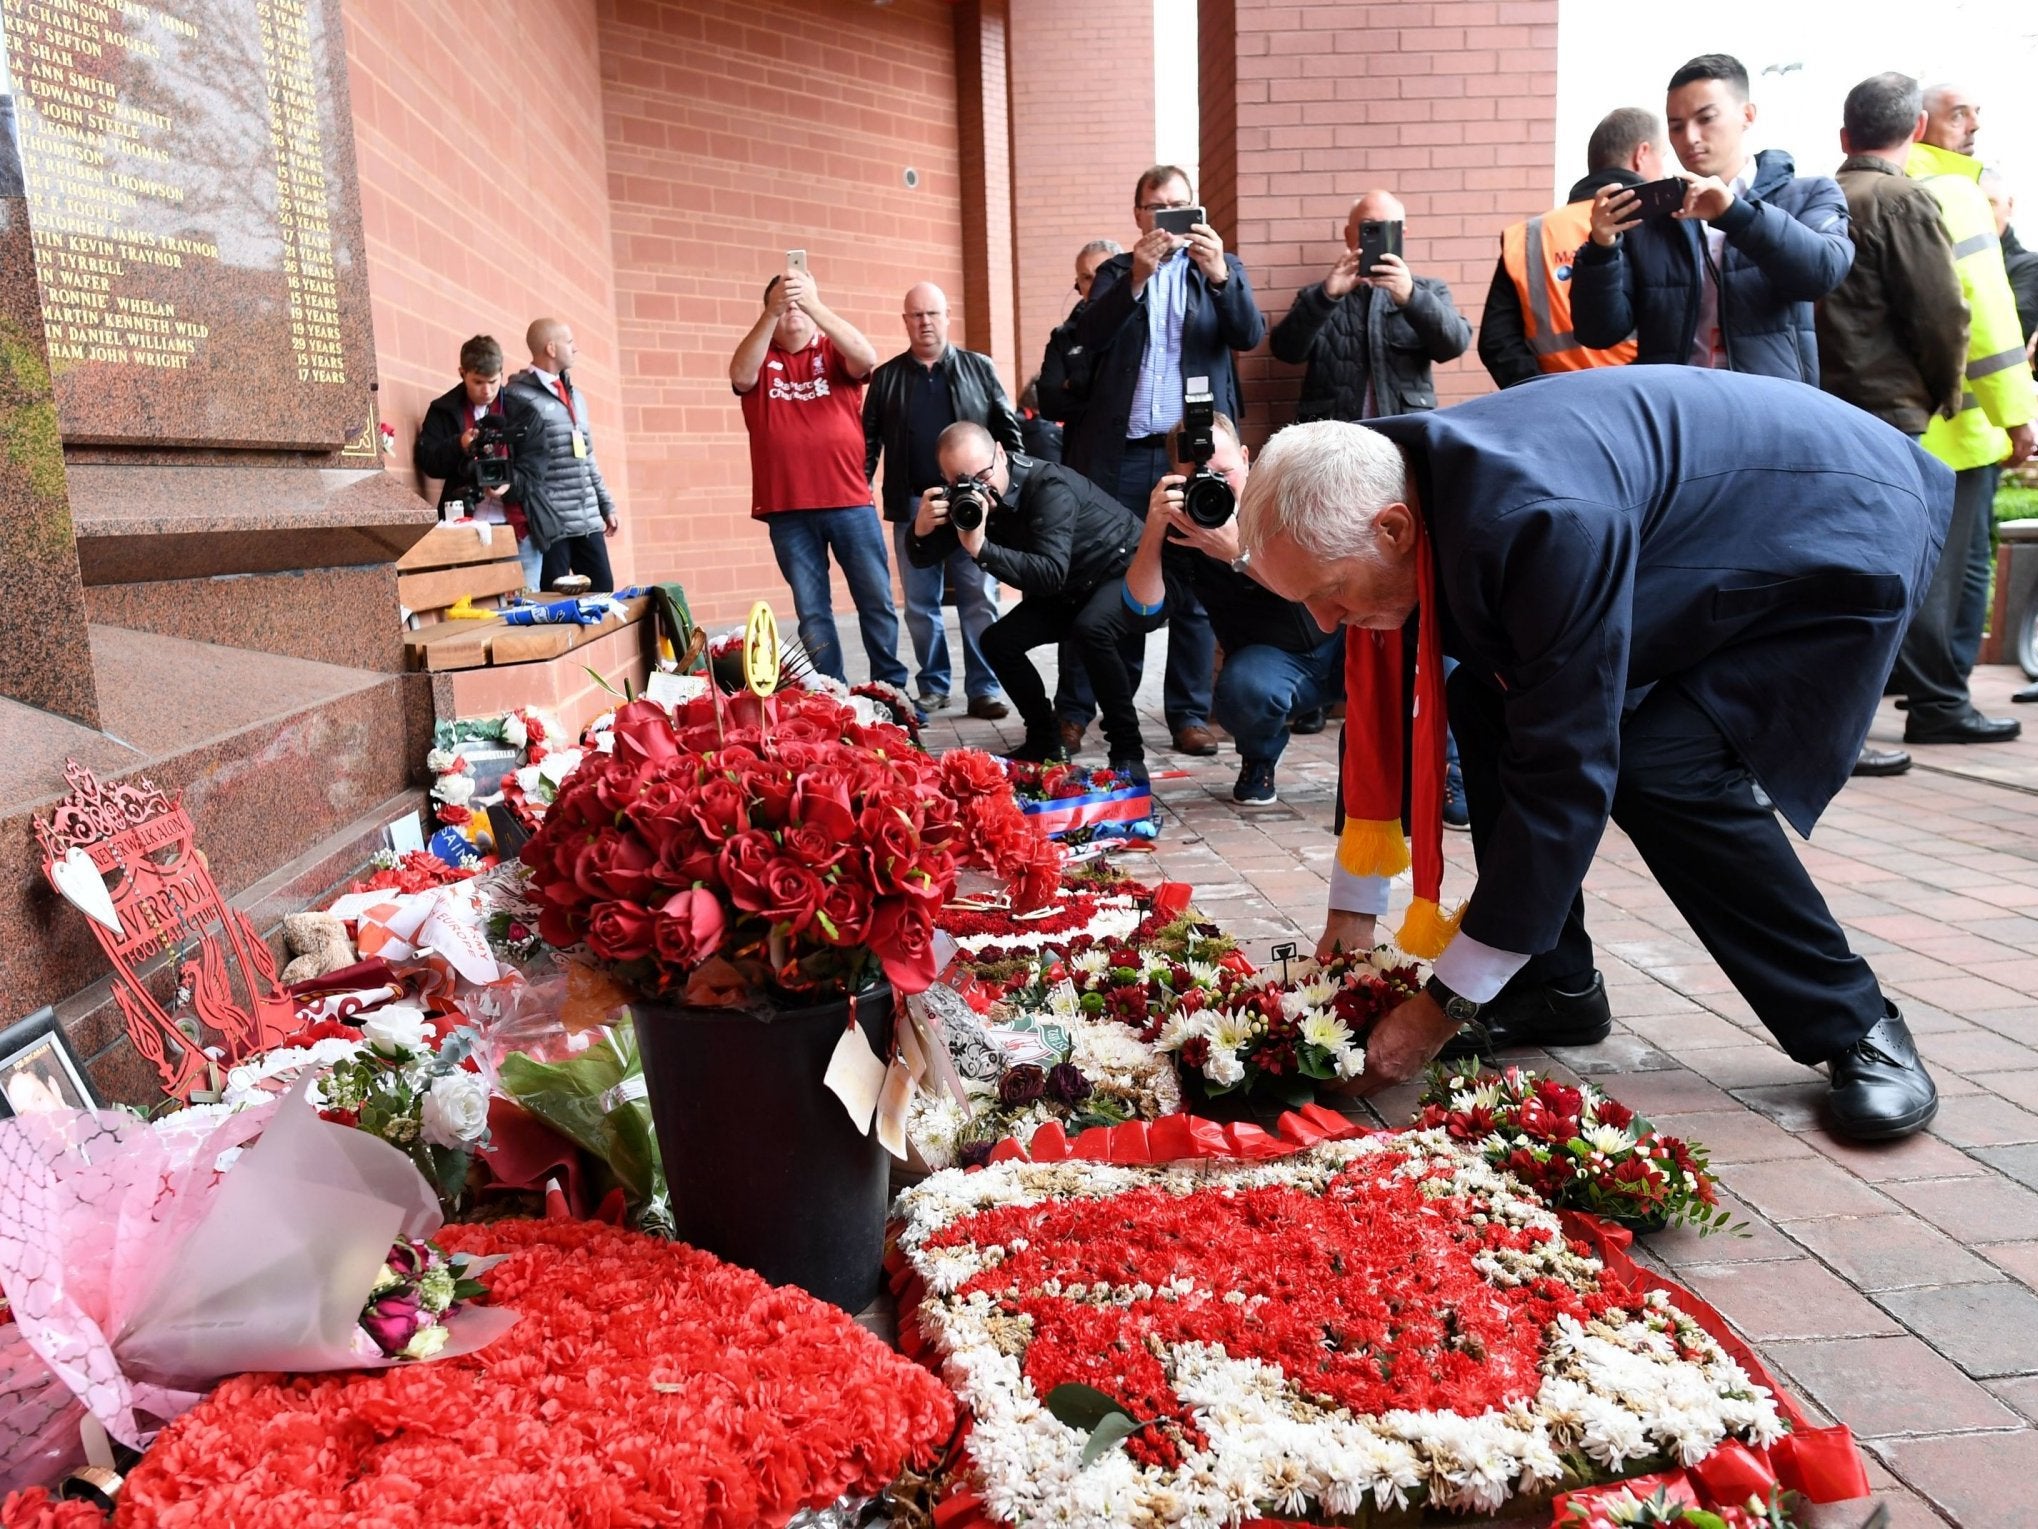 Labour leader lays wreath for Hillsborough victims